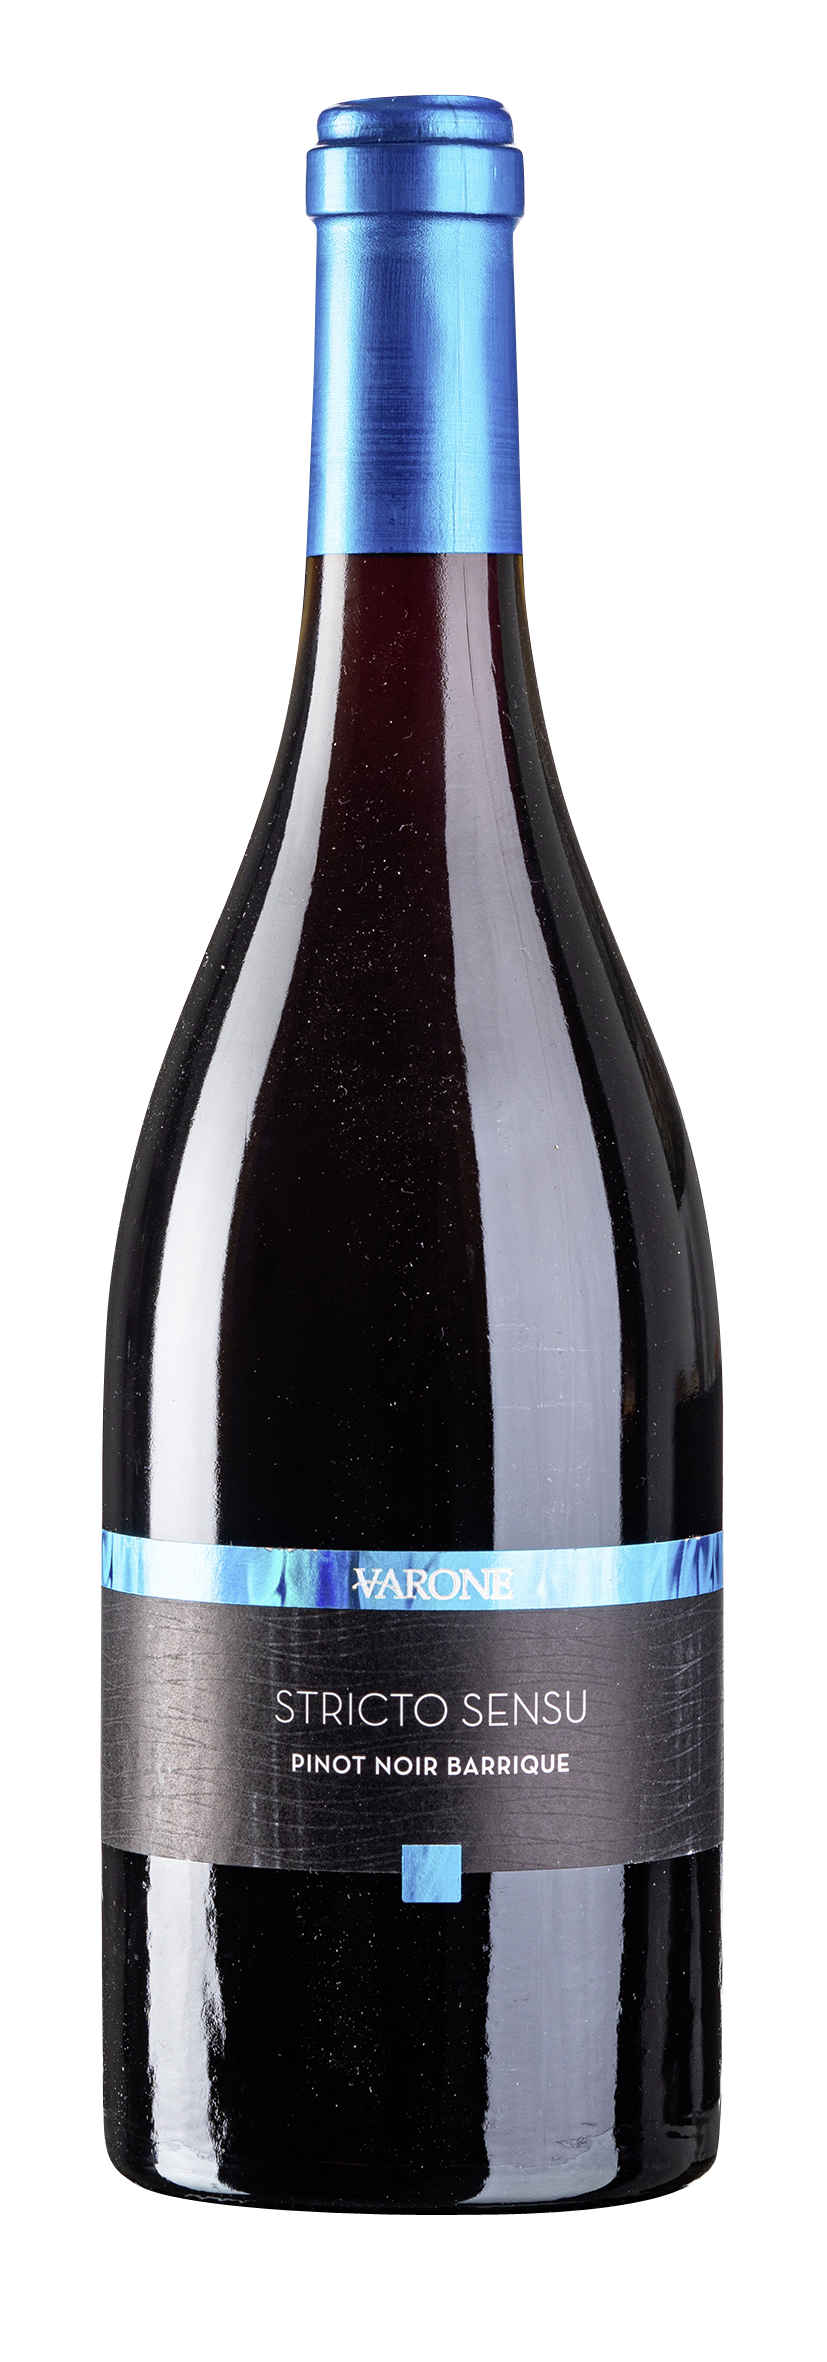 Valais AOC Pinot Noir Stricto Sensu 2017